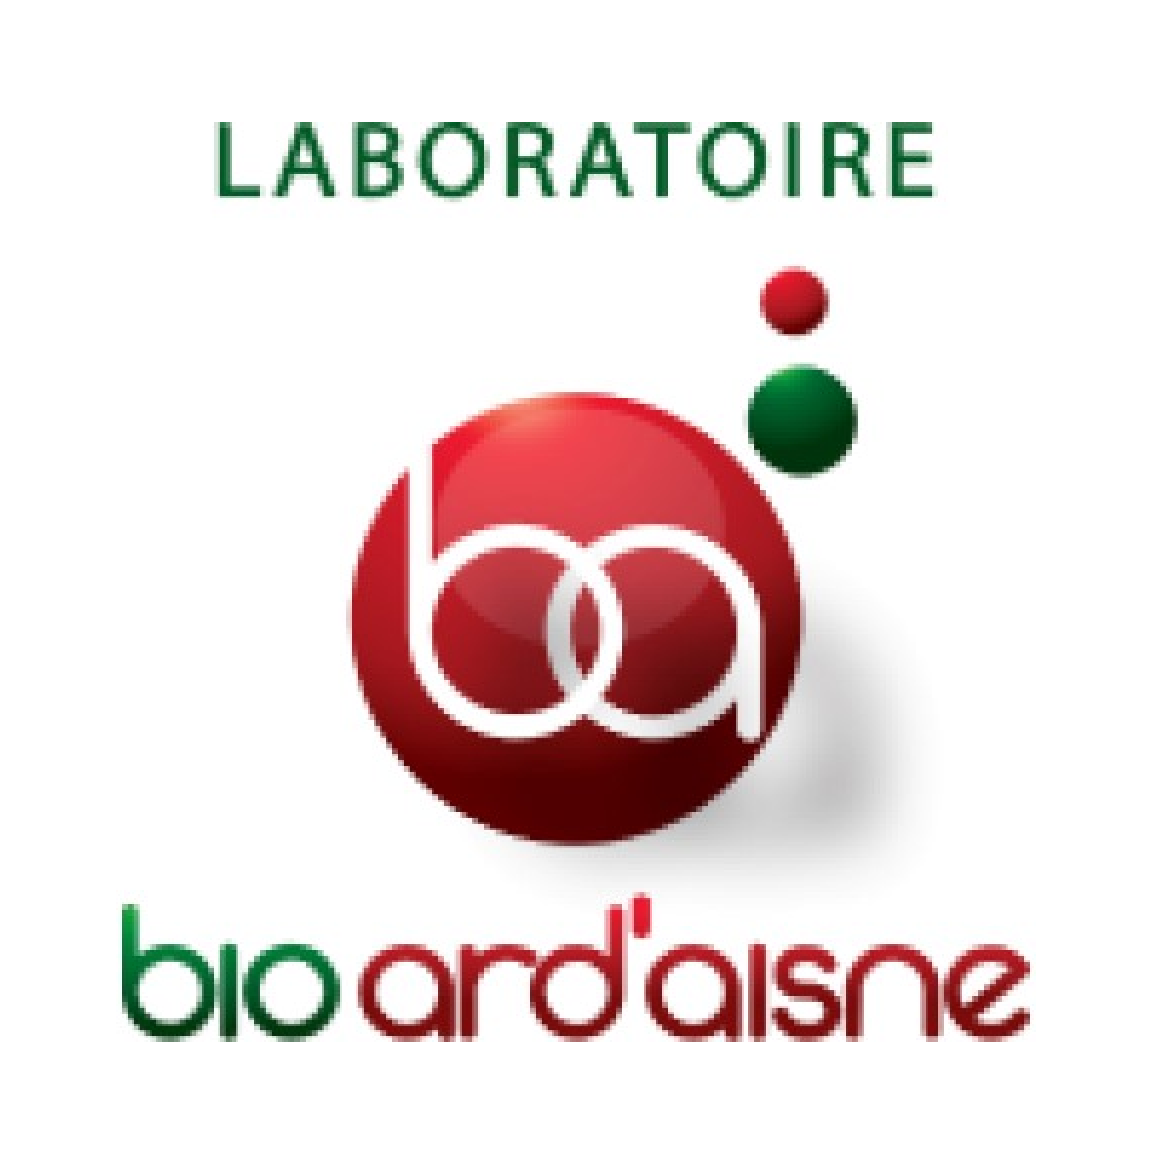 Logo LBI